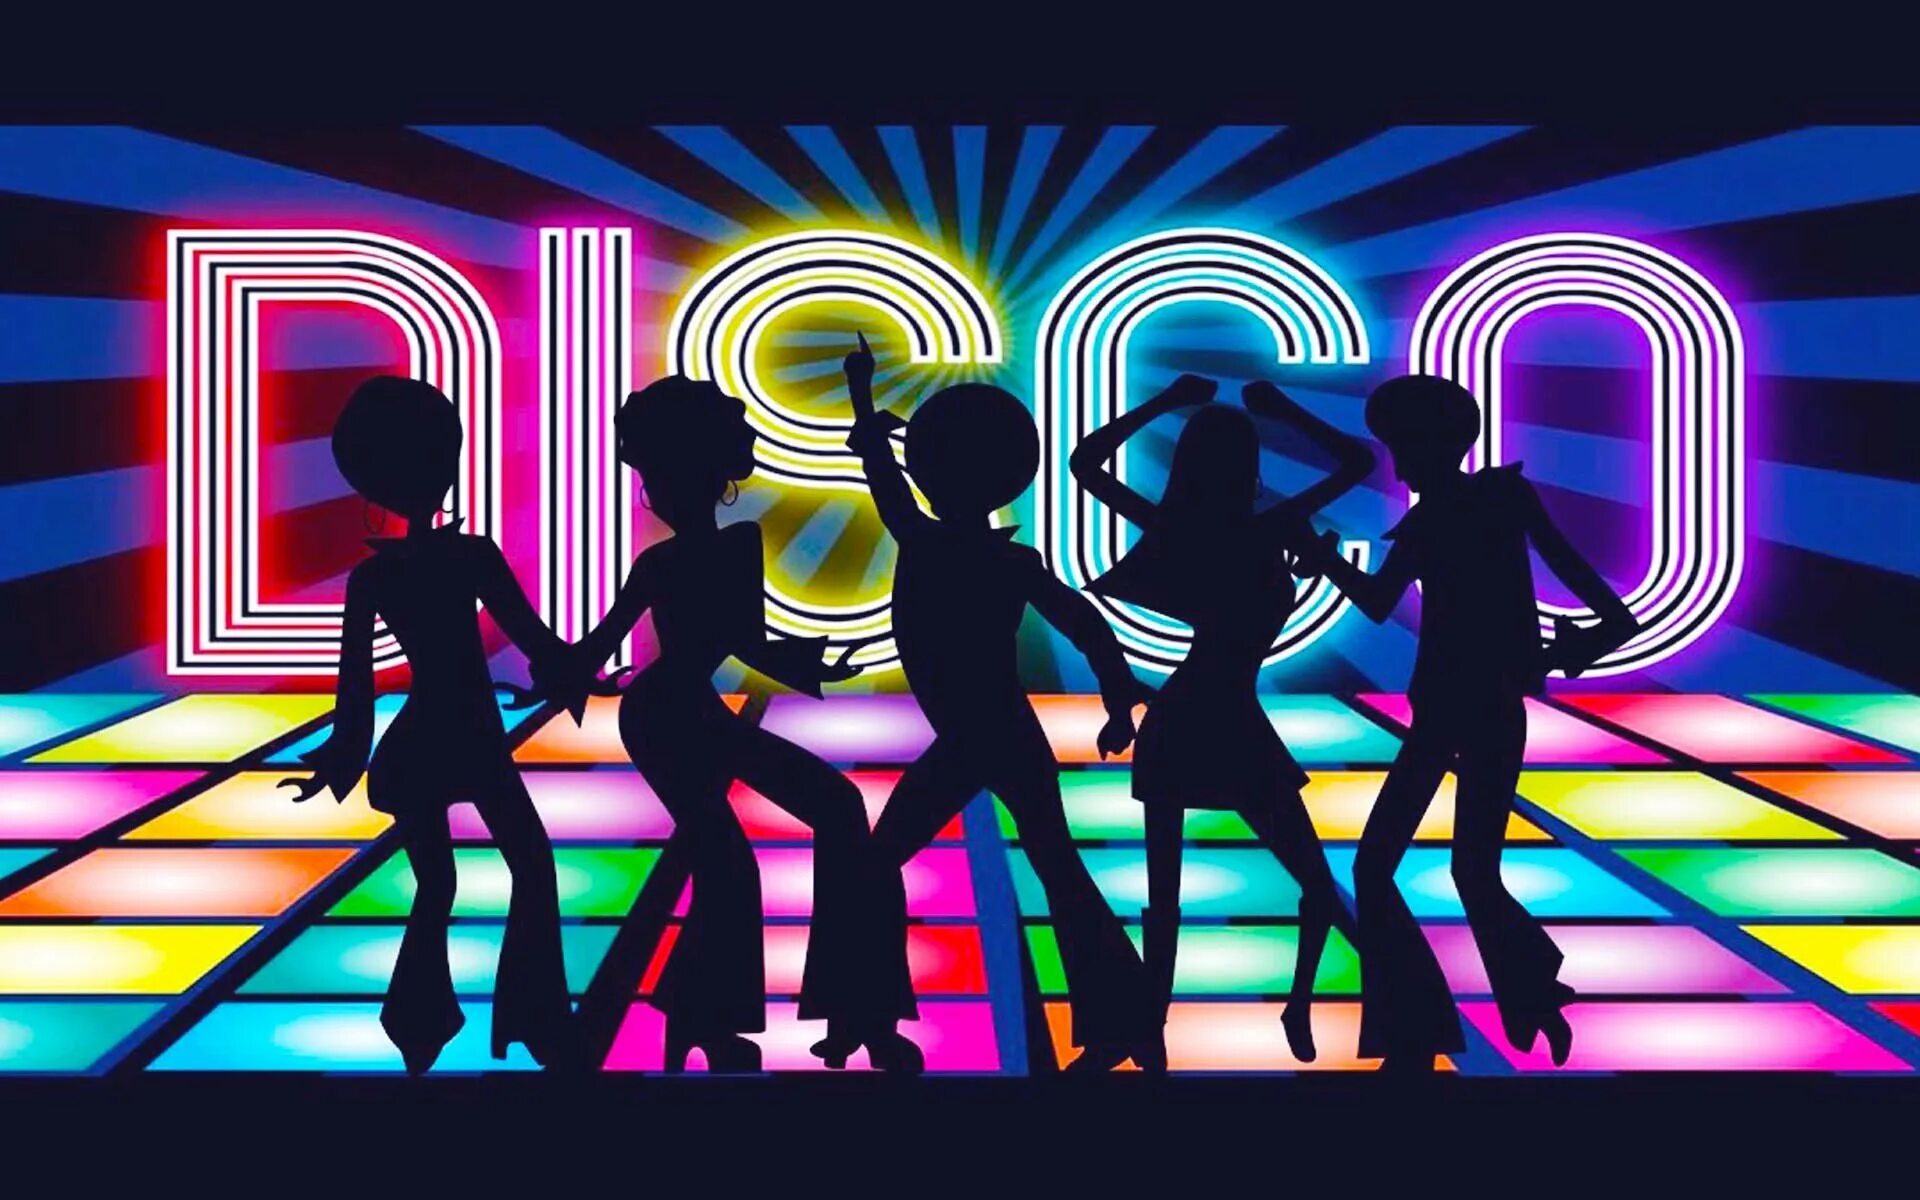 Disco disco party party remix. Диско танцы. Стиль диско. Дискотека в стиле 80-х. Фон в стиле диско.